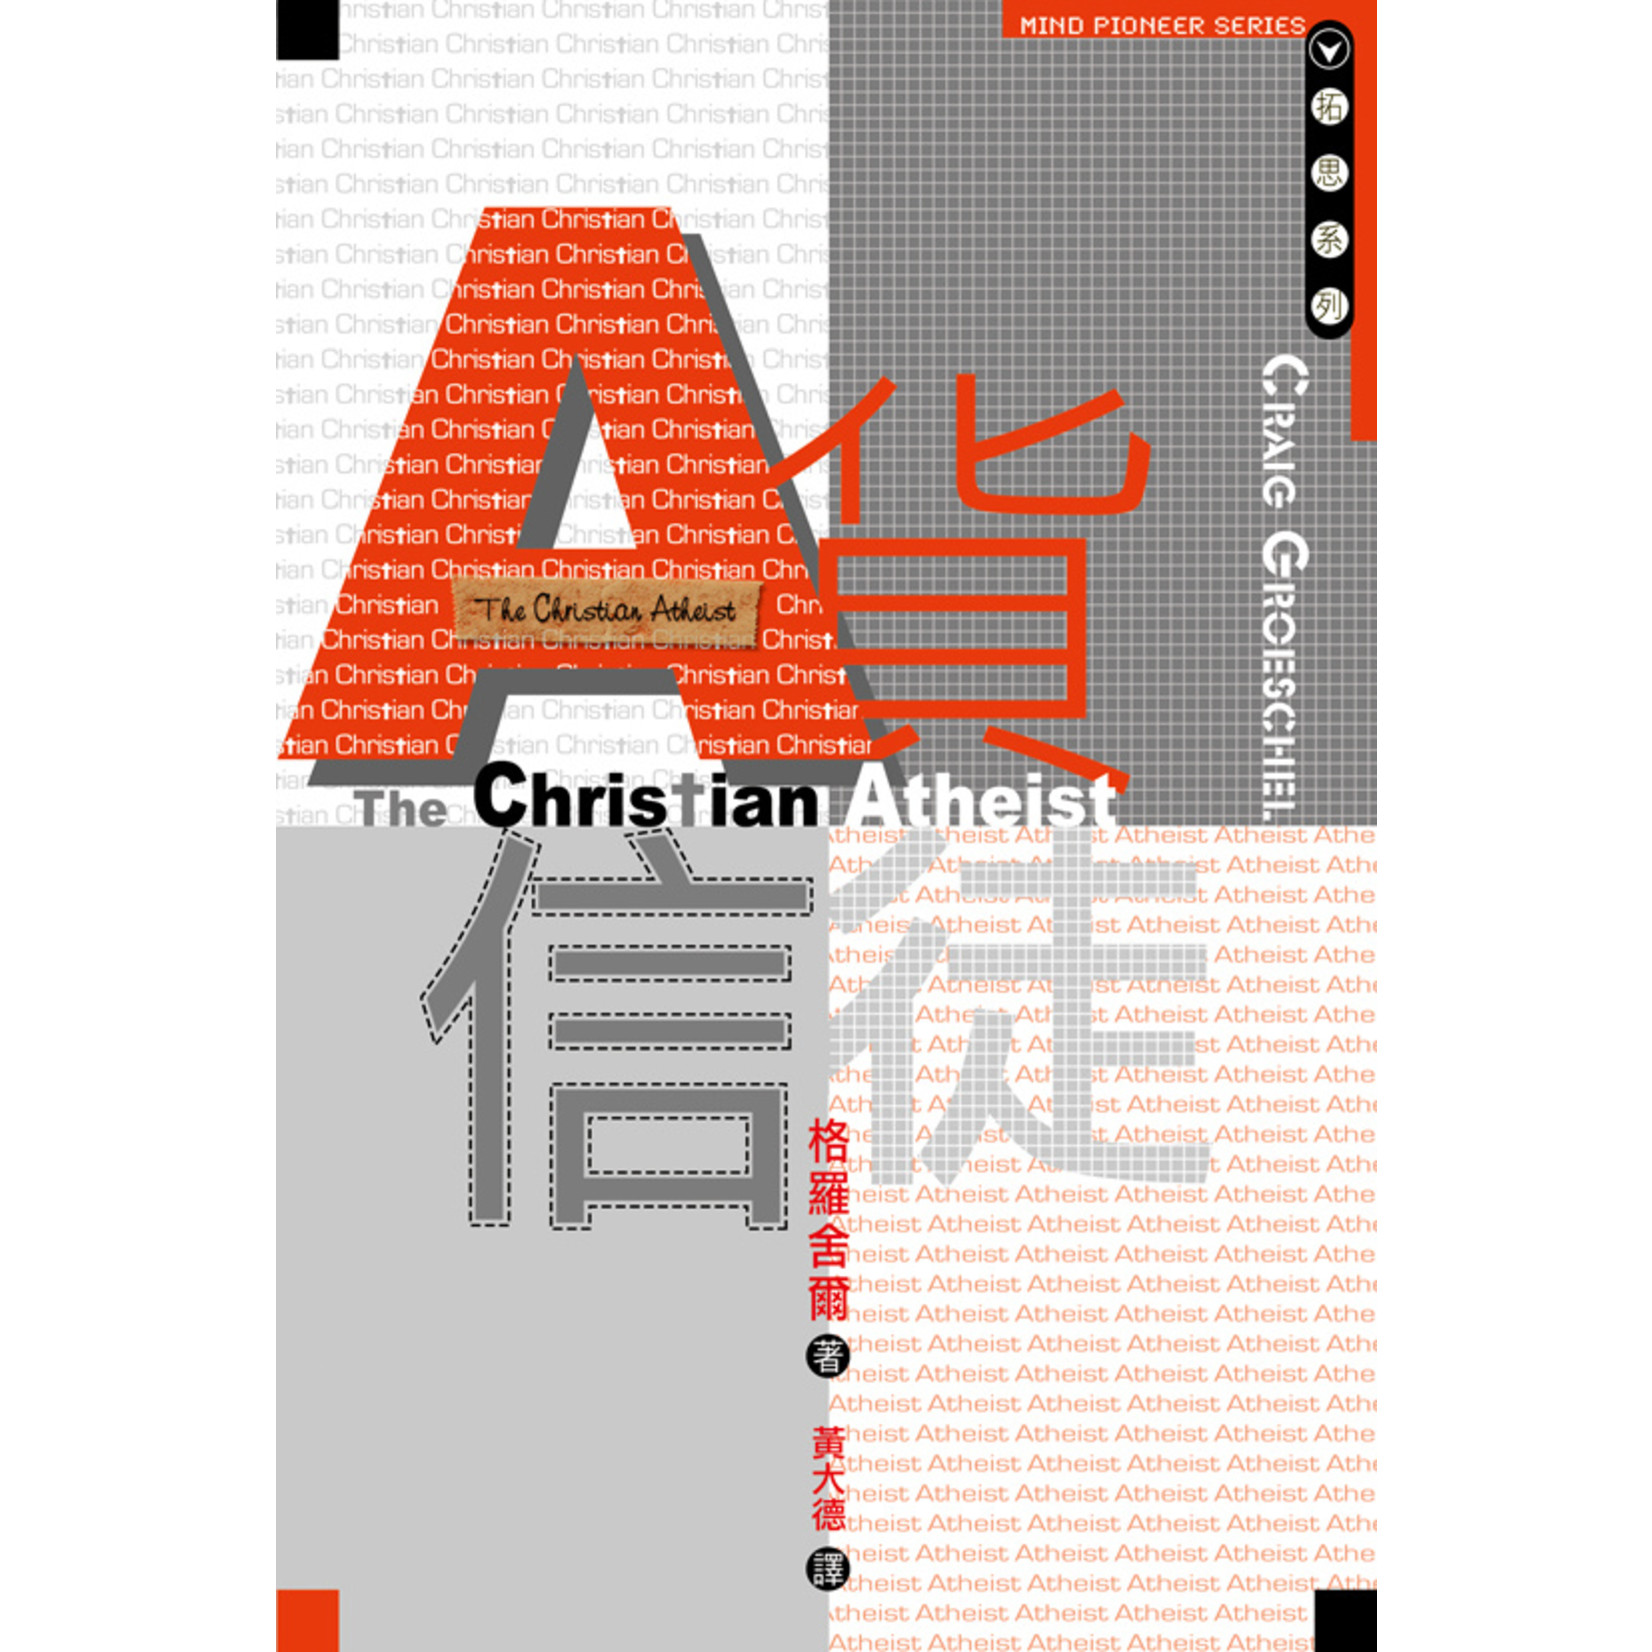 天道書樓 Tien Dao Publishing House A貨信徒 The Christian Atheist